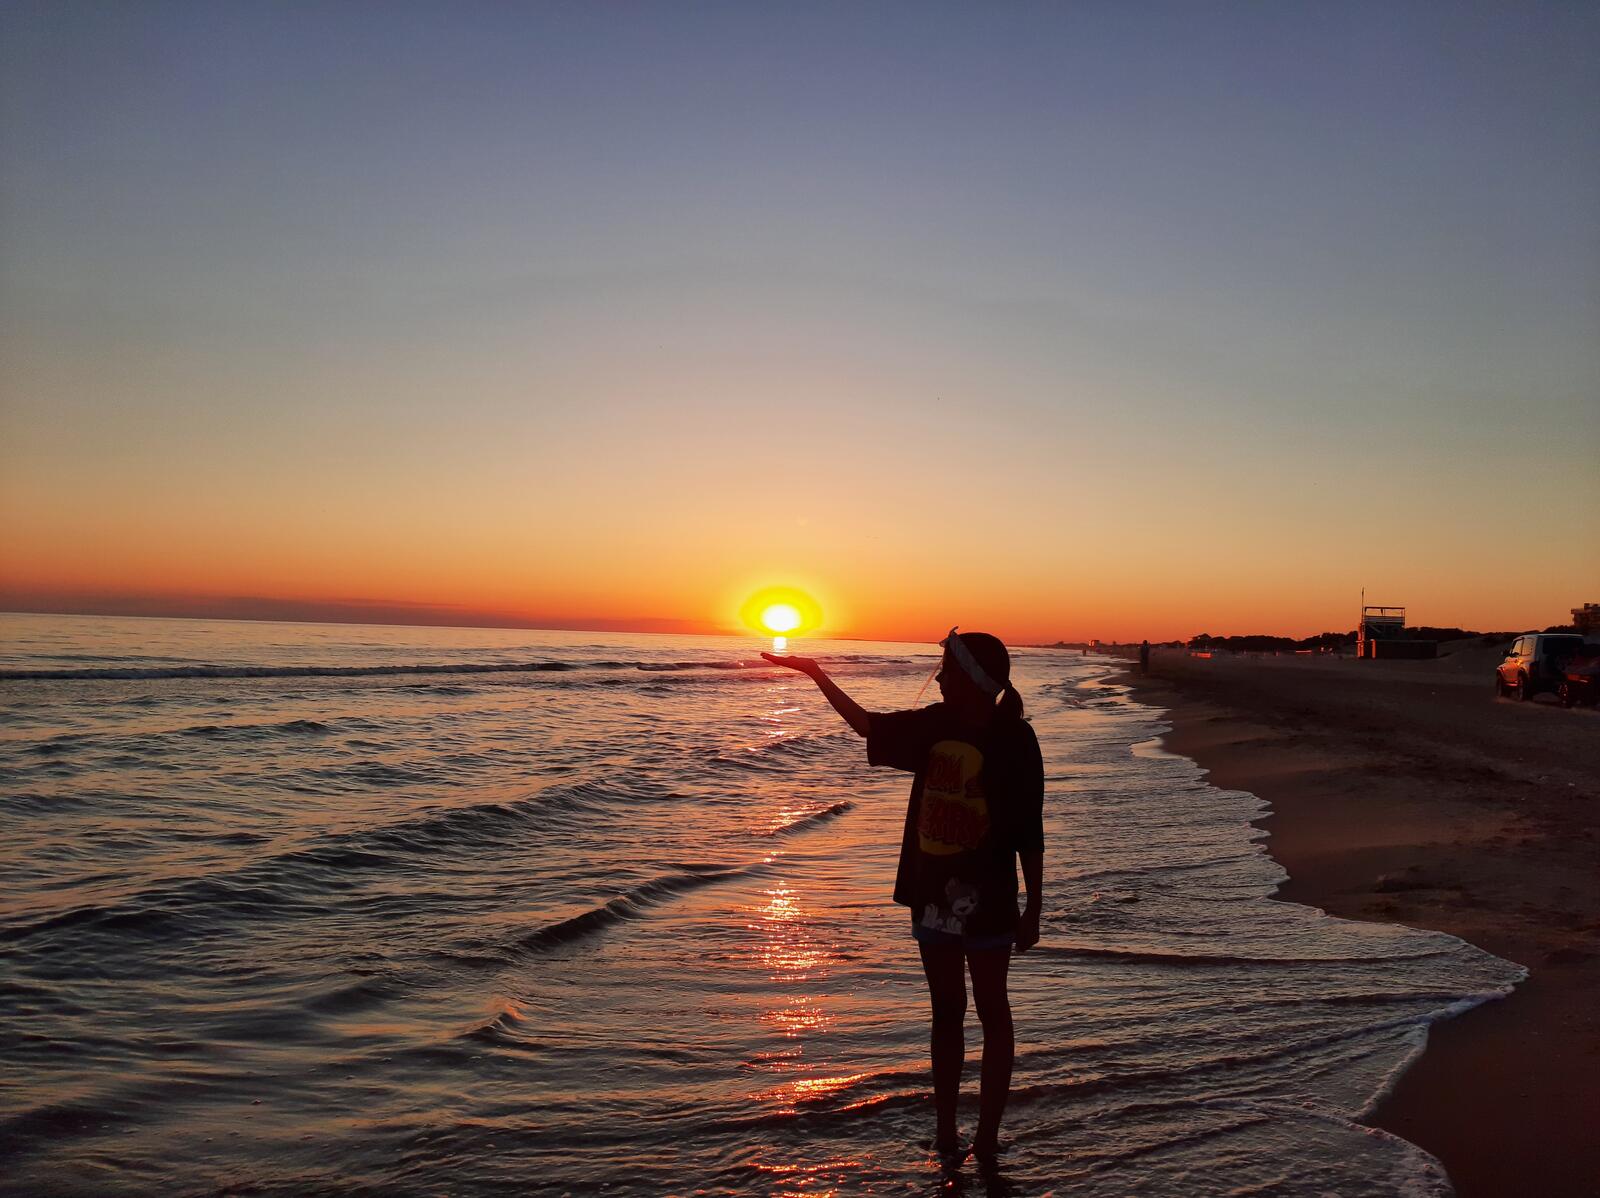 Бесплатное фото Девочка держит солнце в руках на закате